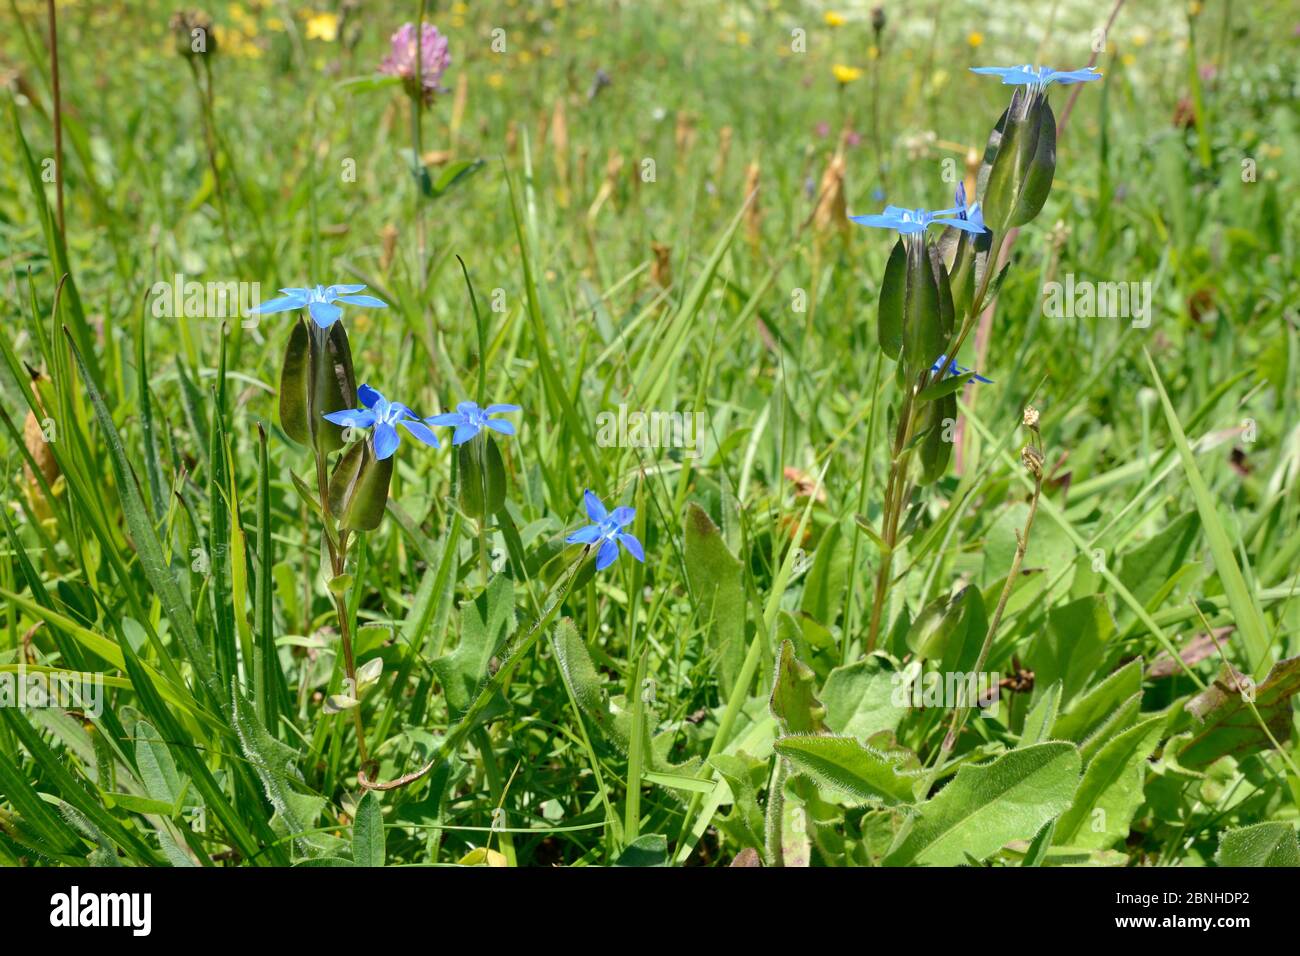 Bladder gentian (Gentiana utriculosa) flowering in alpine grassland, Zelengora mountain range, Sutjeska National Park, Bosnia and Herzegovina, July. Stock Photo